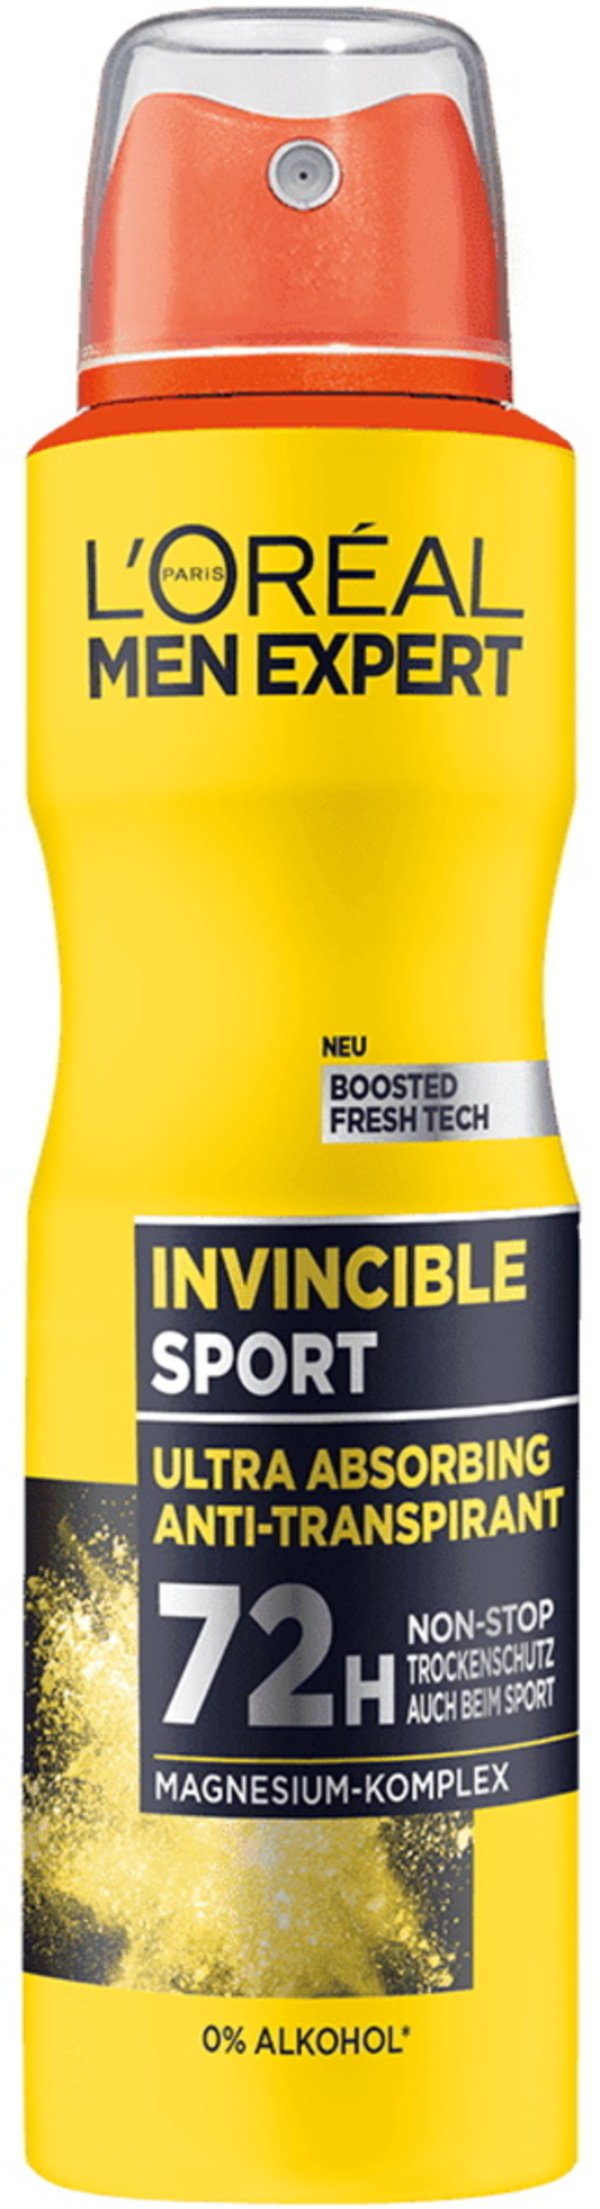 Bild 1 von L'Oreal Men Expert Invincible Sport Ultra Absorbing Anti-Transpirant 72H 150ML